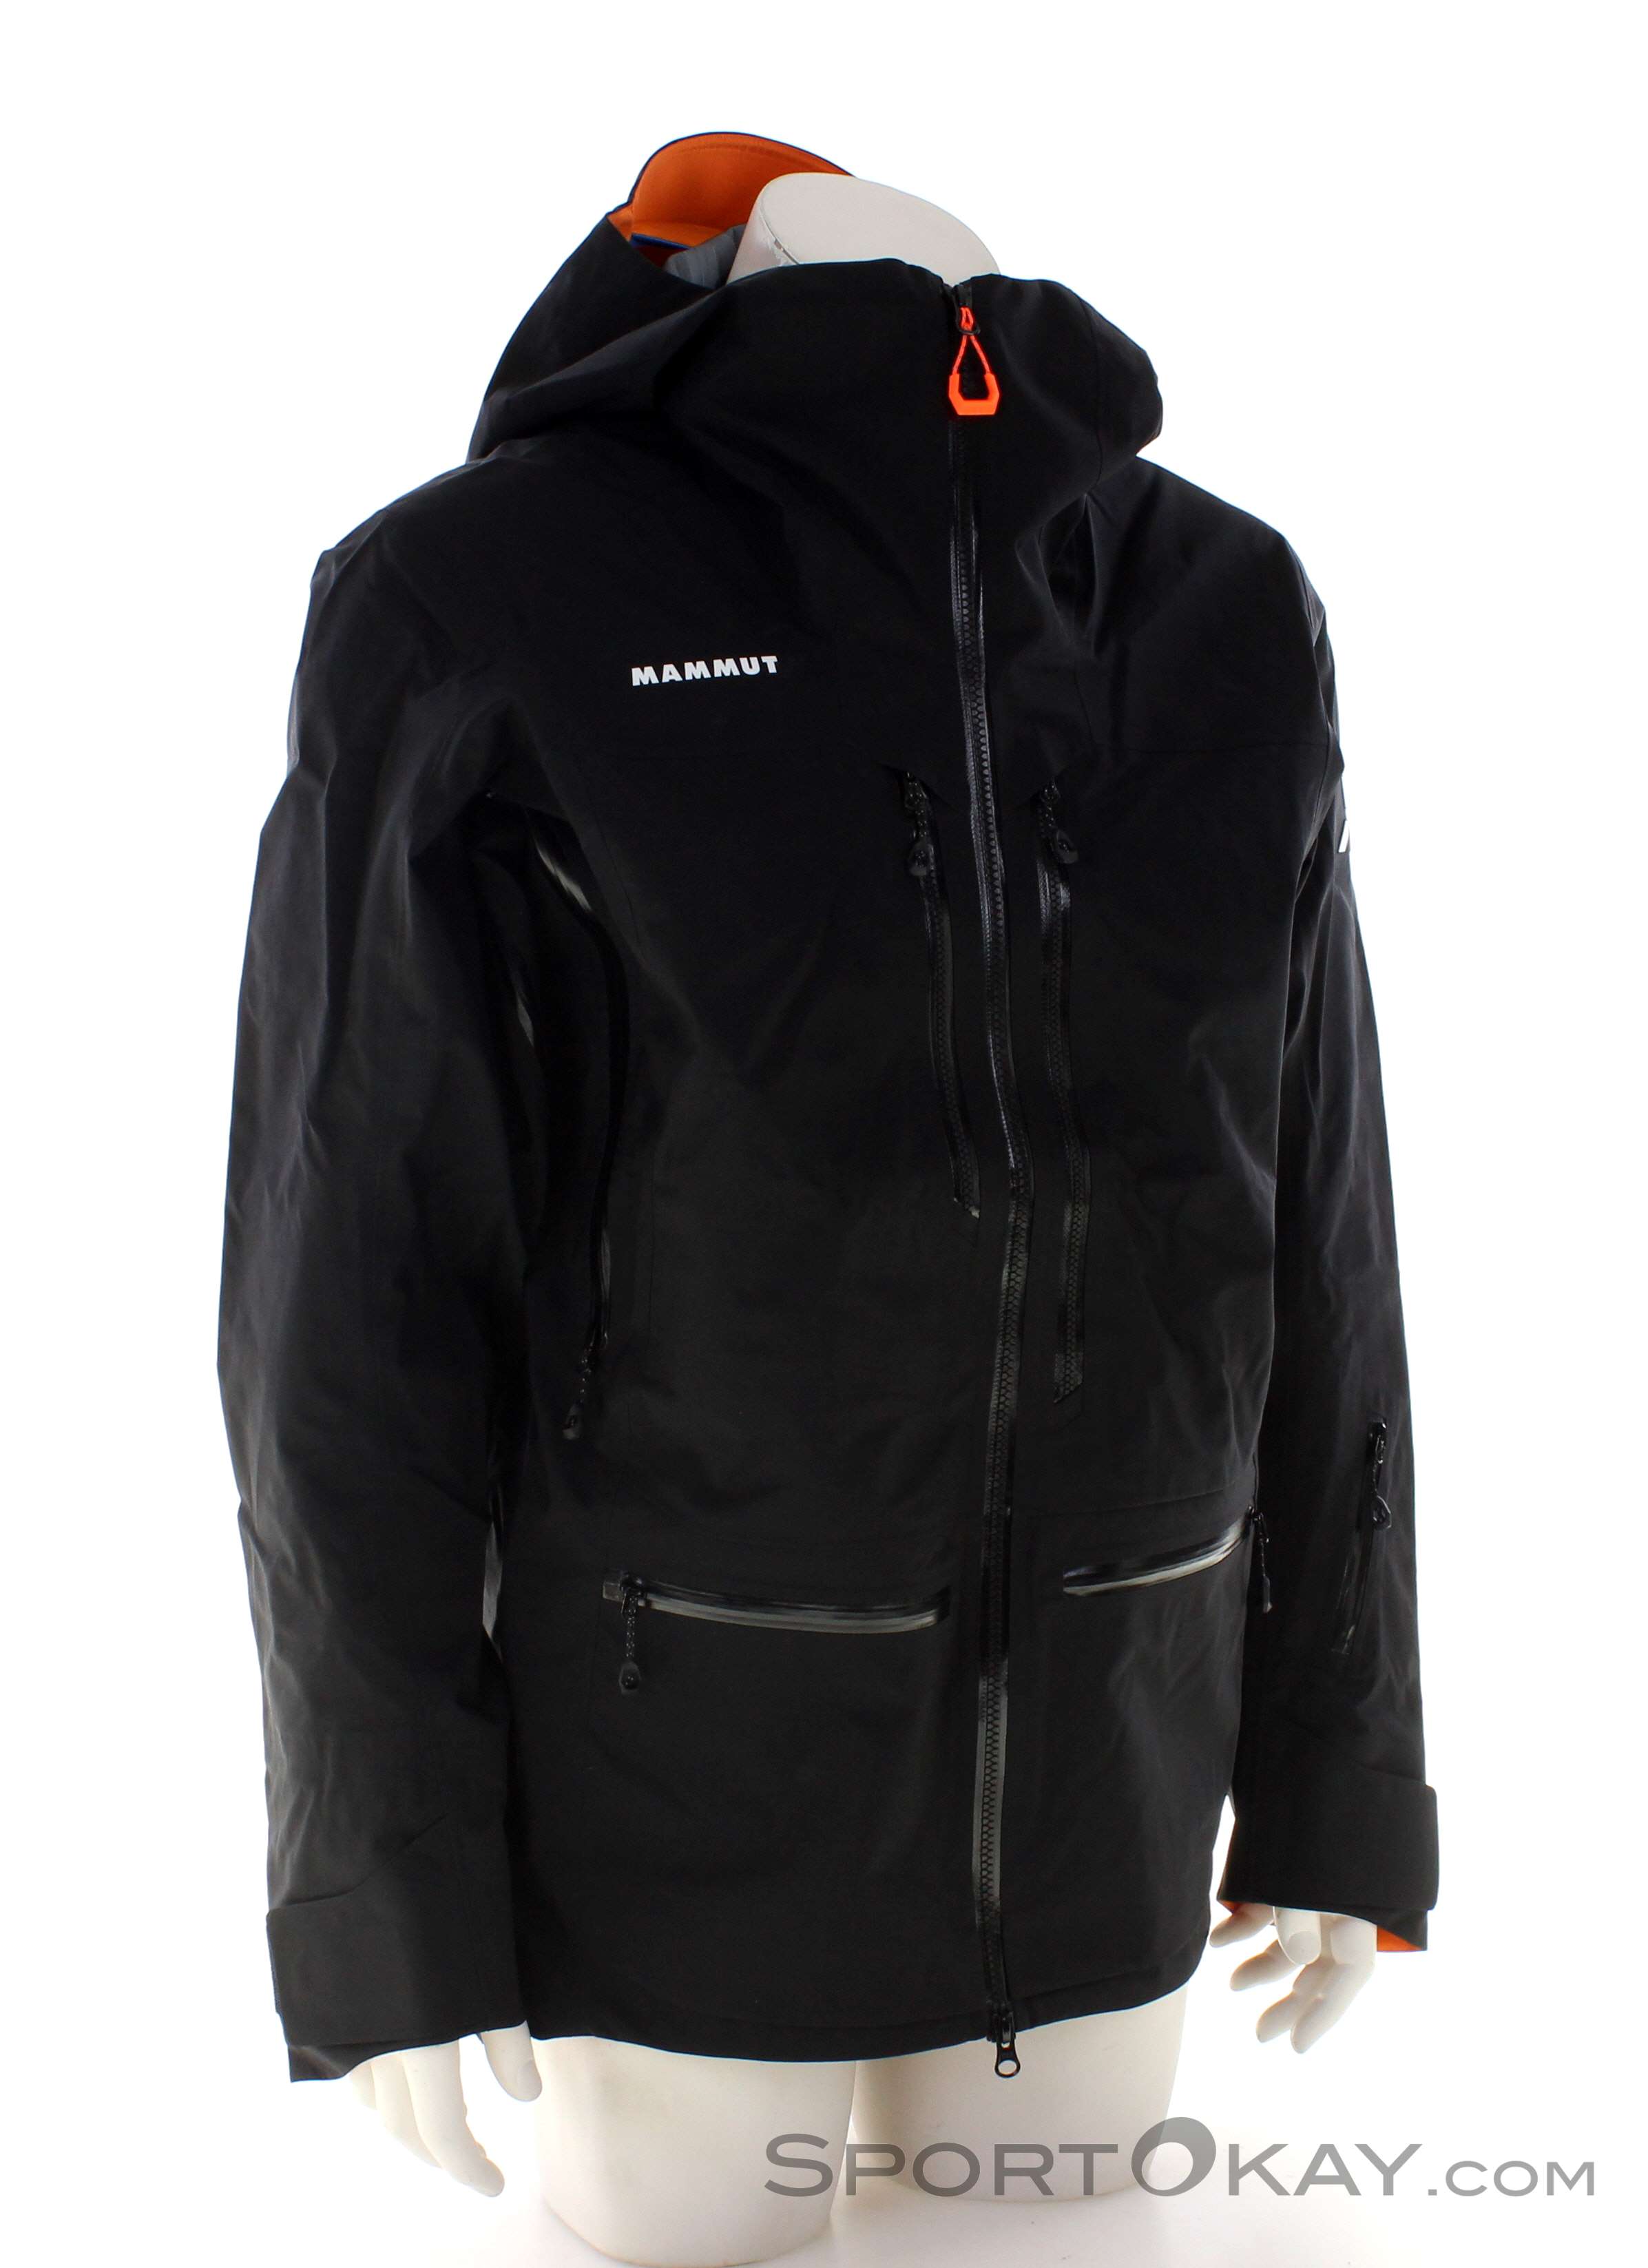 Mammut Eiger Free Pro HS Mens Ski Jacket - Ski Jackets - Ski Clothing ...